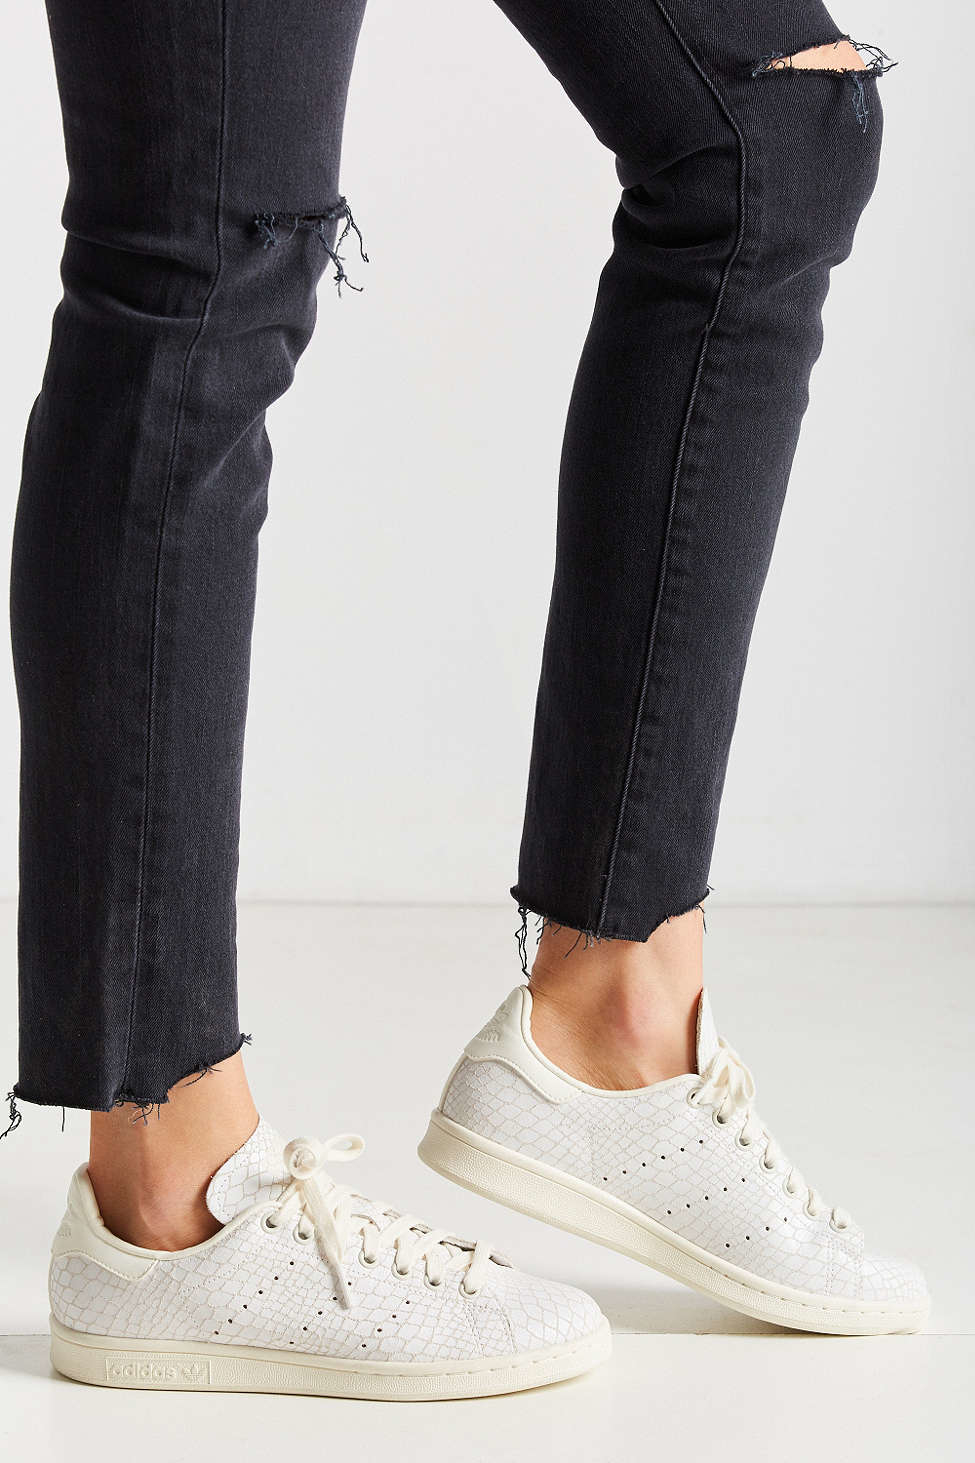 Vriend Mijnwerker Walging adidas Originals Stan Smith Croc-Embossed Leather Low-Top Sneakers in White  | Lyst